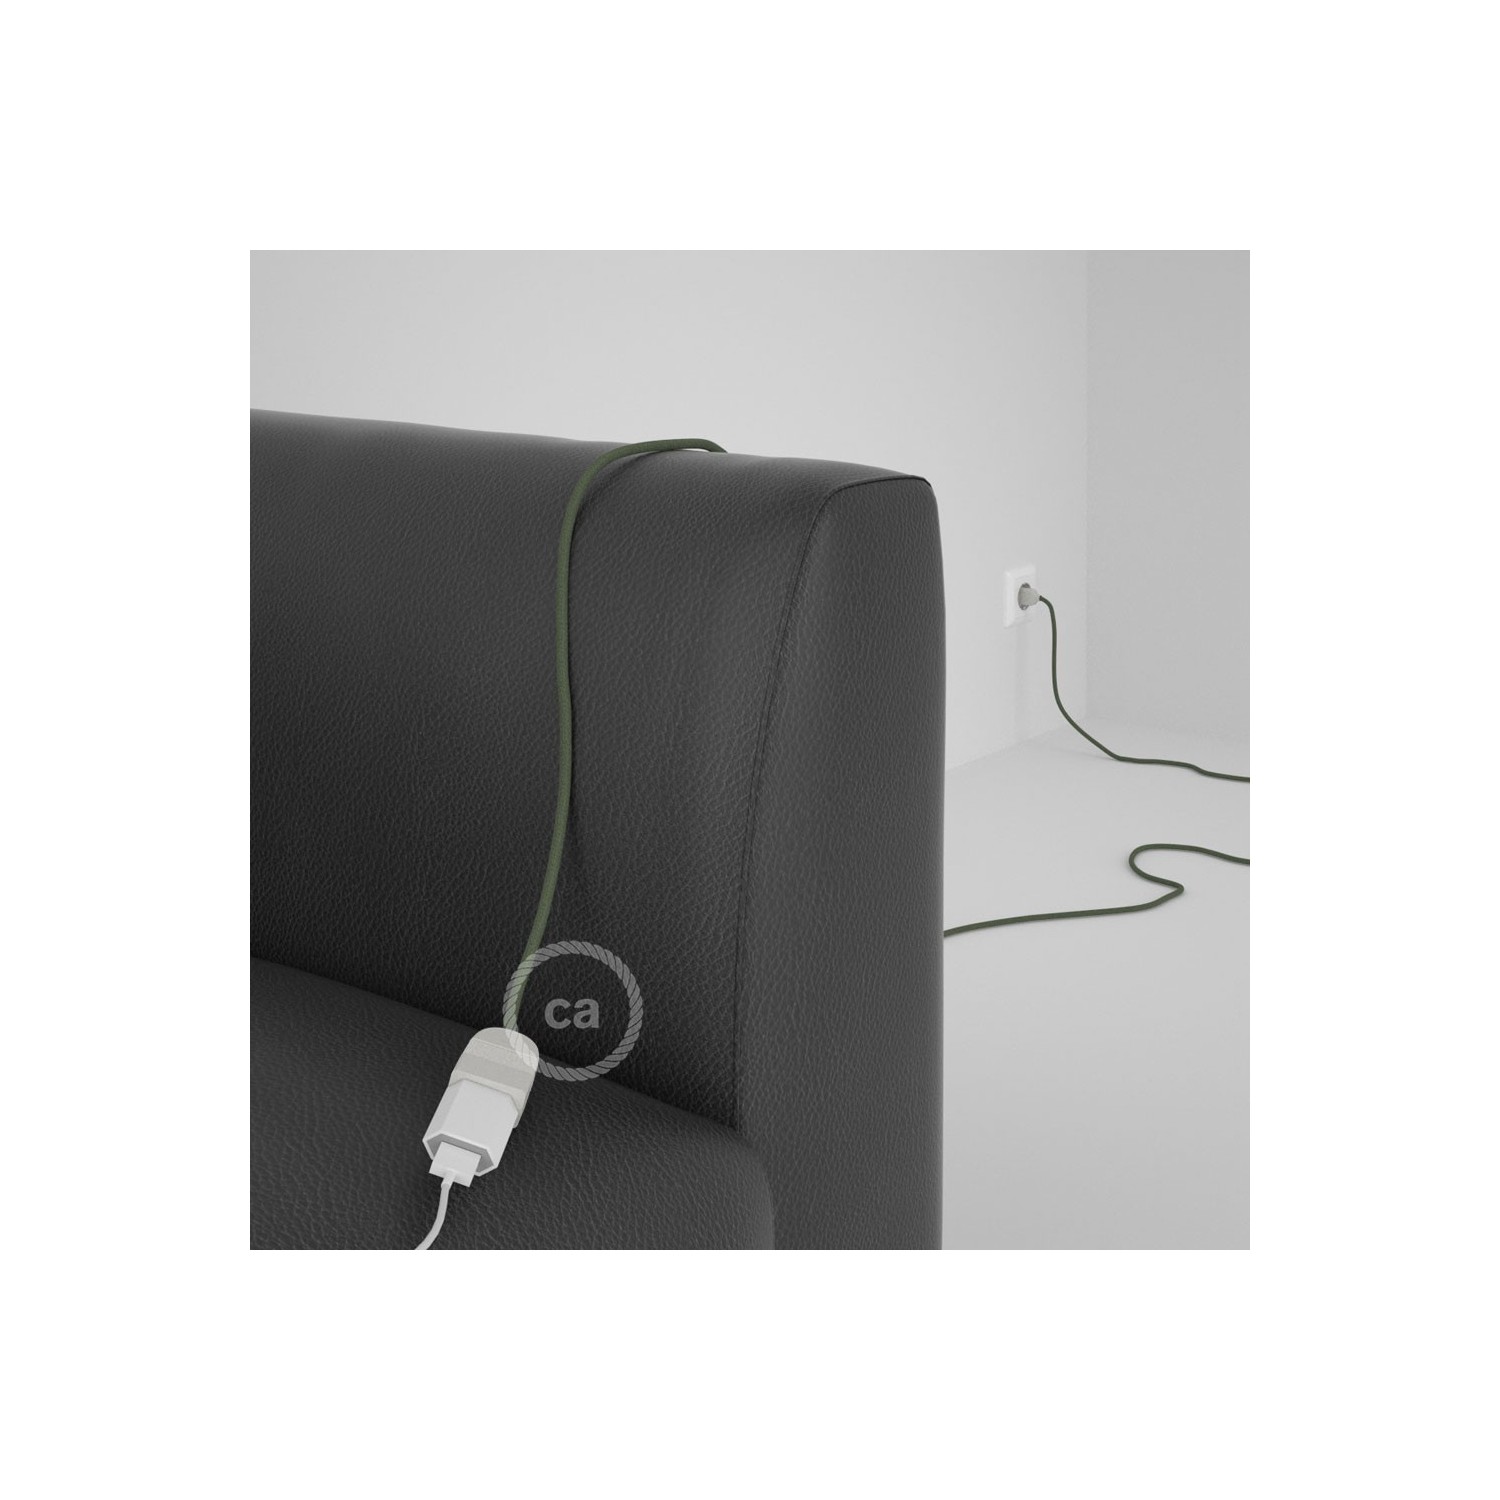 Rallonge électrique avec câble textile RC63 Coton Vert Gris 2P 10A Made in Italy.